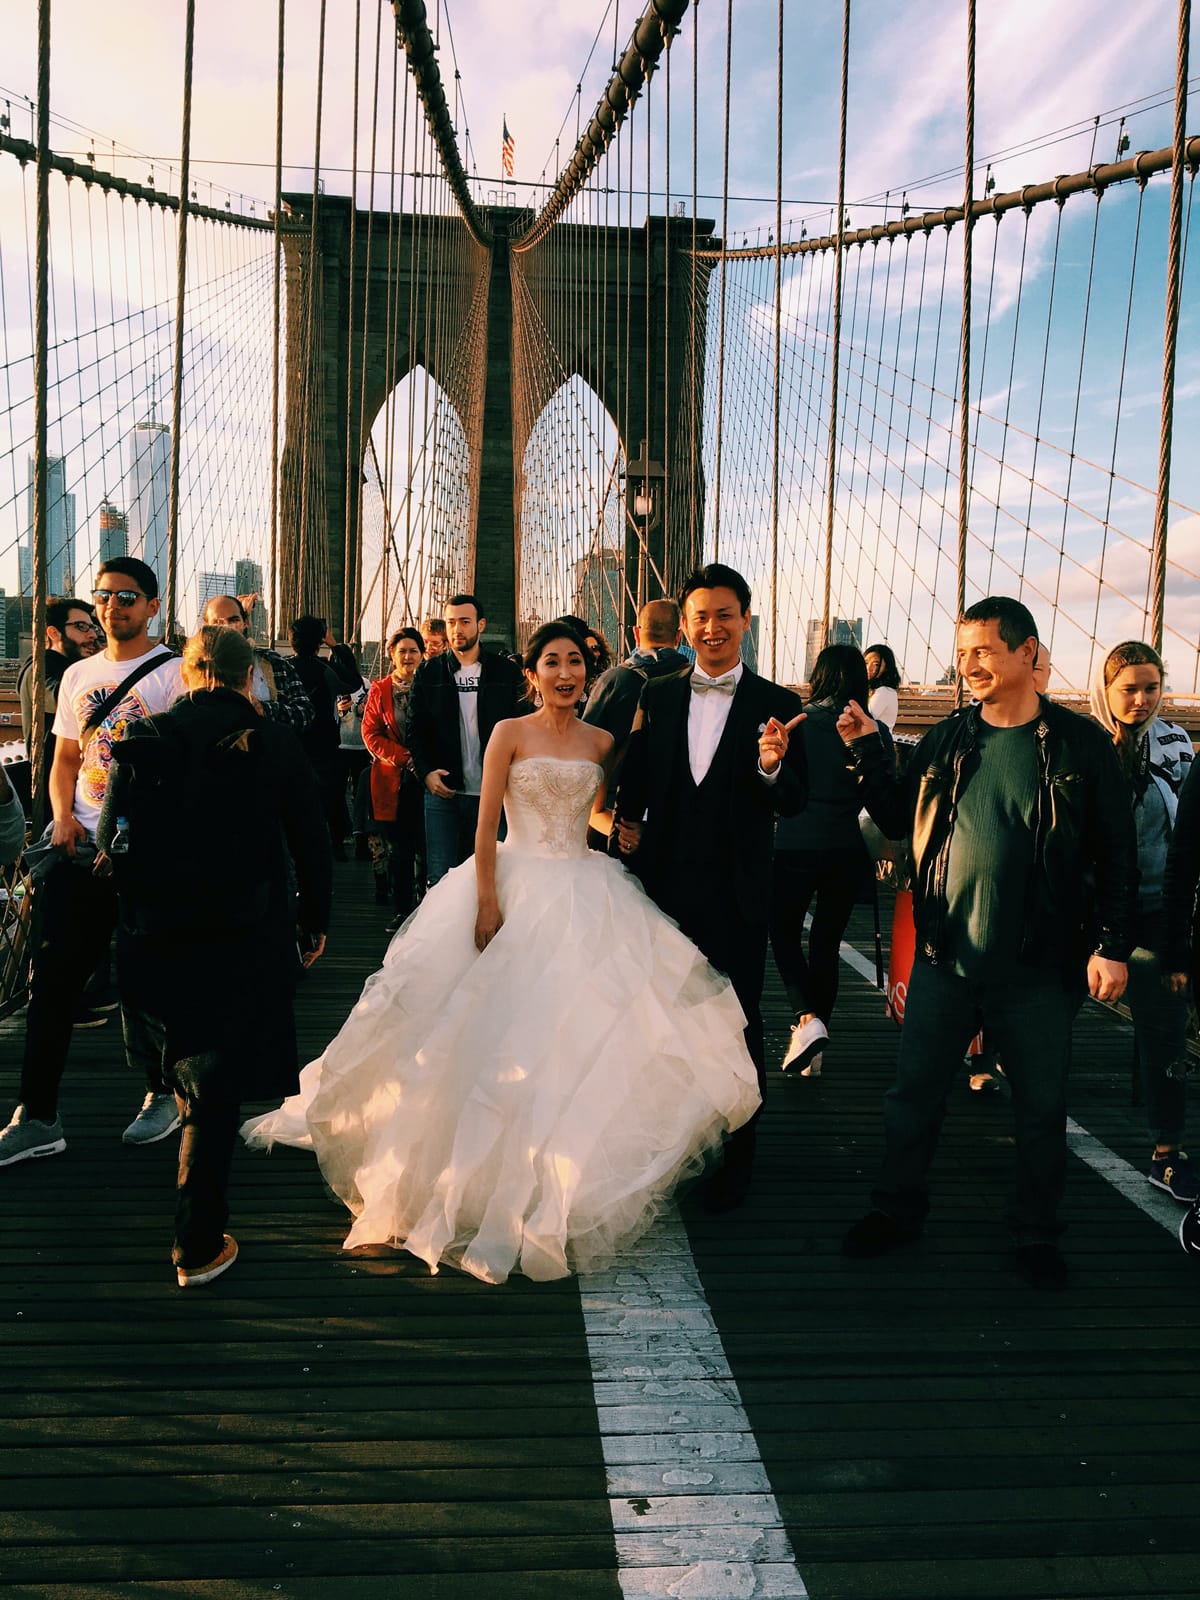 A wedding taking place on a bridge